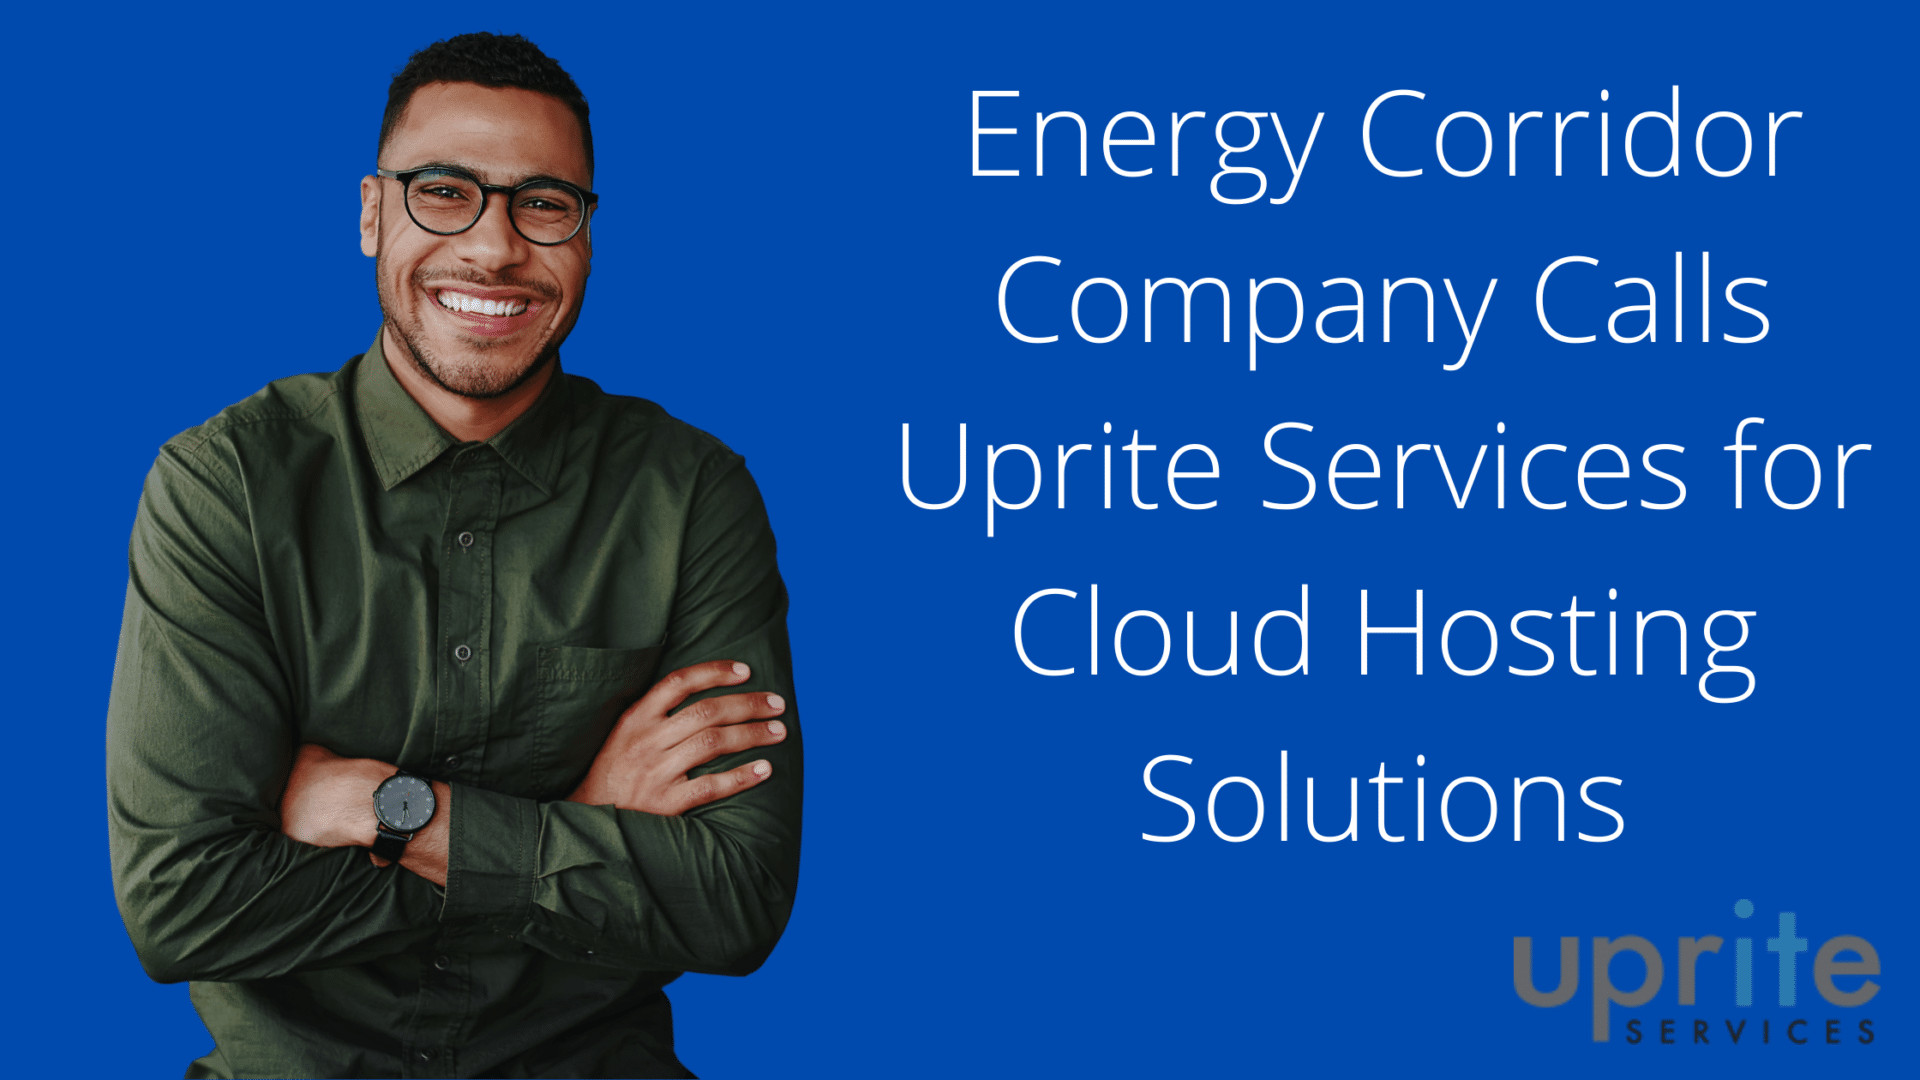 Energy Corridor Company Calls Uprite Services for Cloud Hosting Solutions